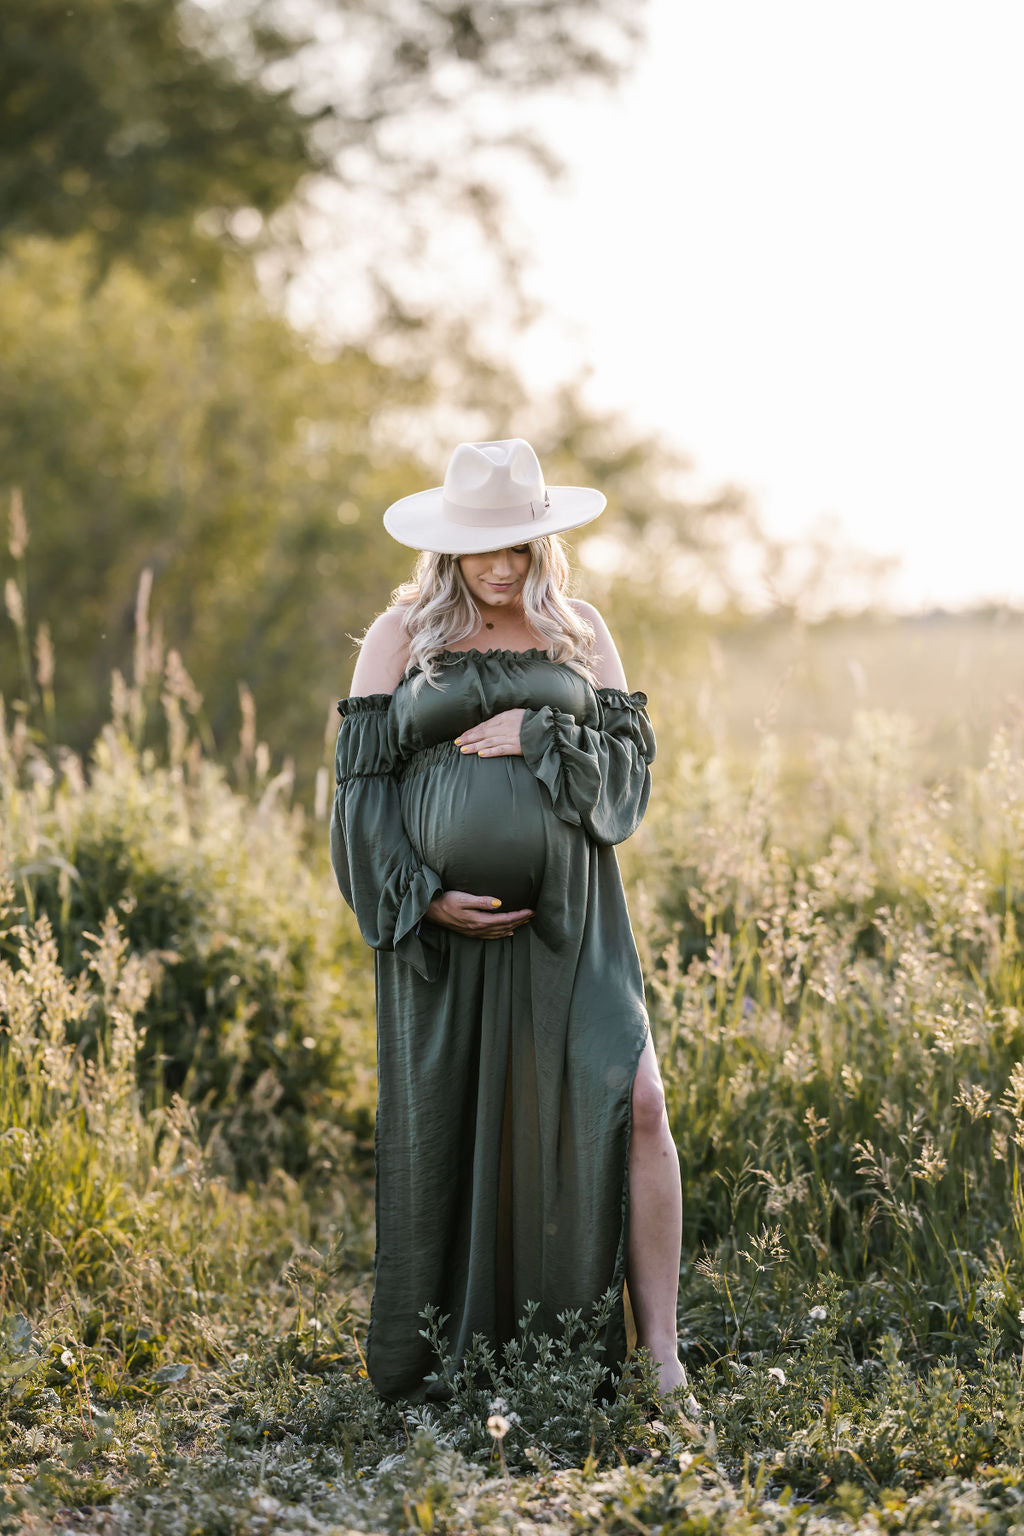 Hunter Green Convertible Gown - maternity photoshoot dress